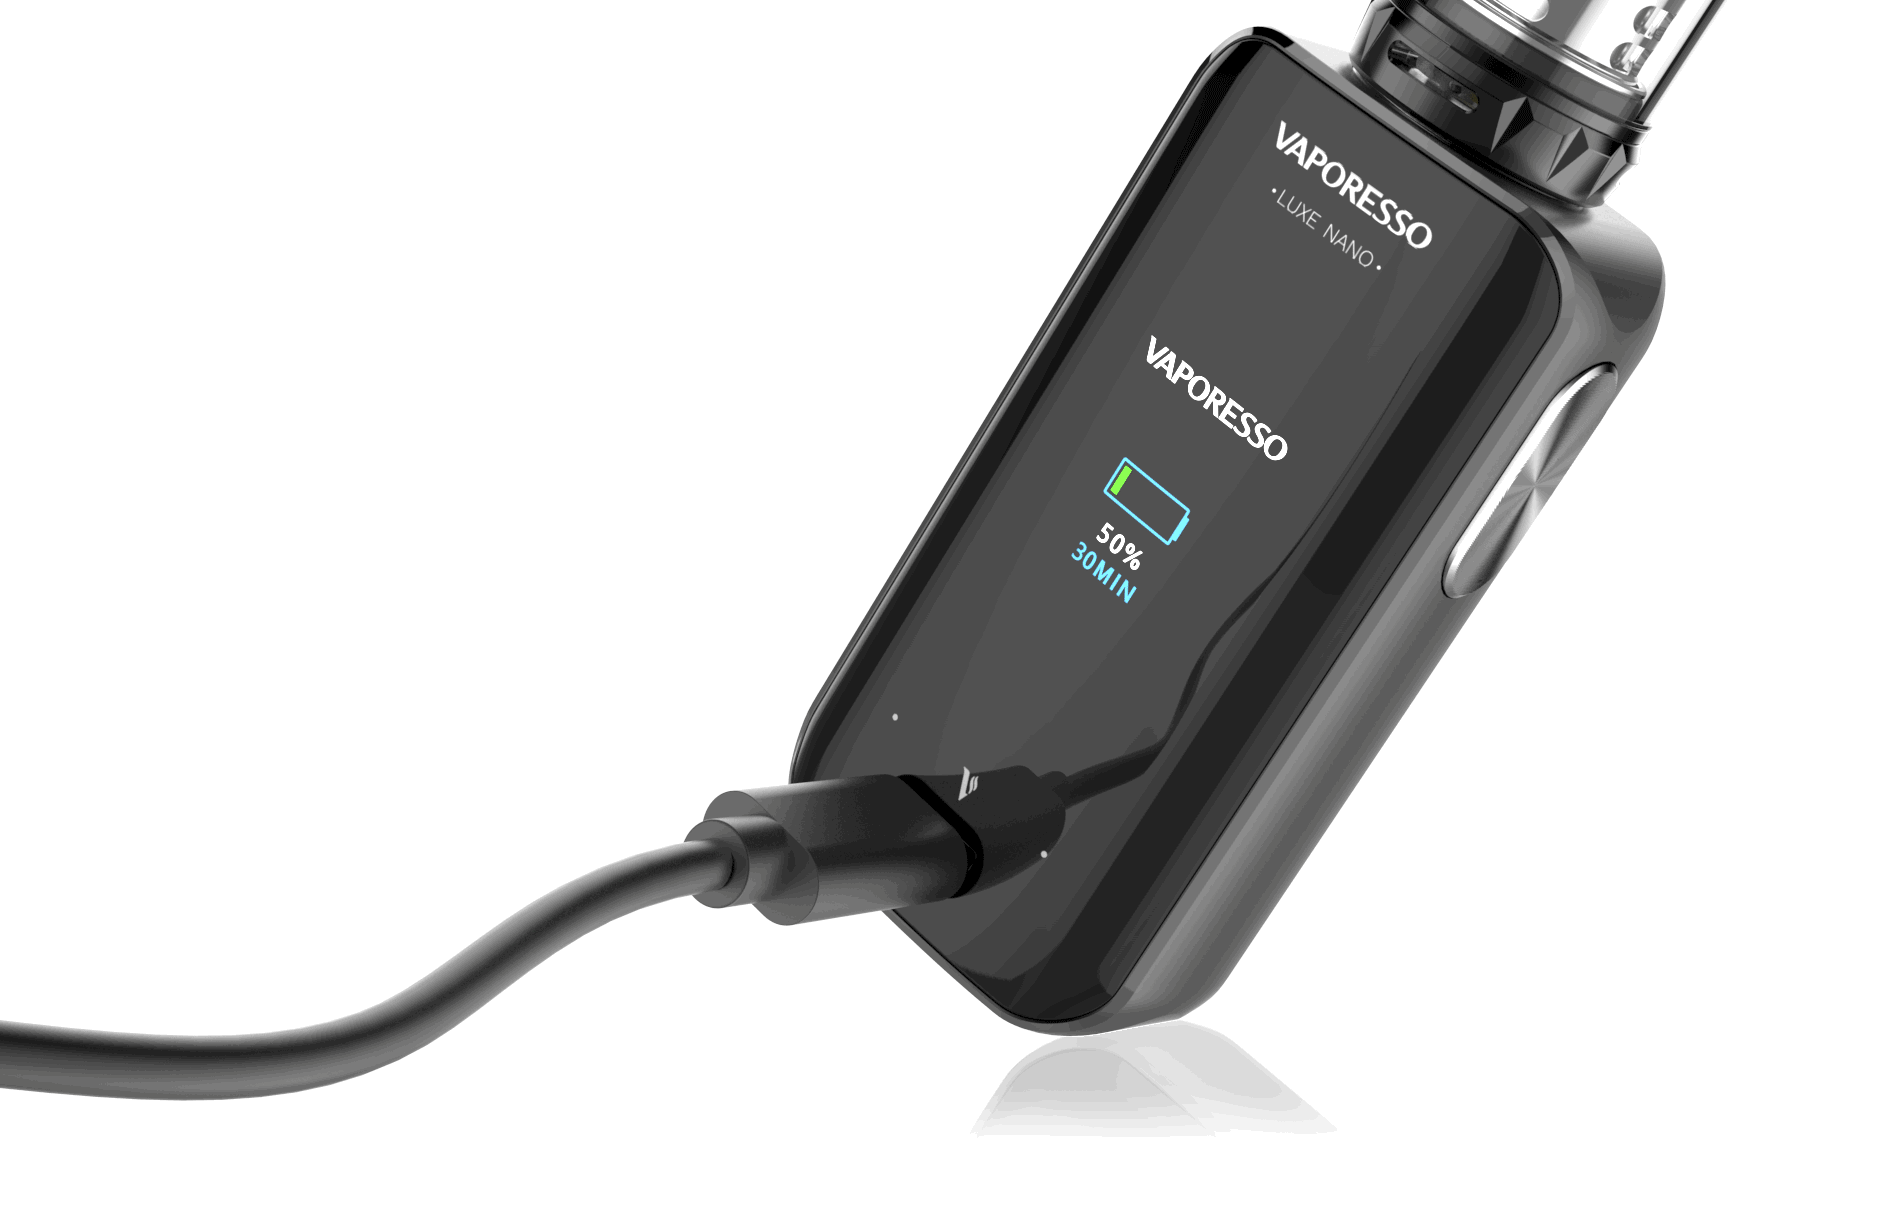 Kit Luxe Nano 2500mah TS 80W avec SKRR-S Mini 3.5ml - Rechargement USB très rapide en 1h30